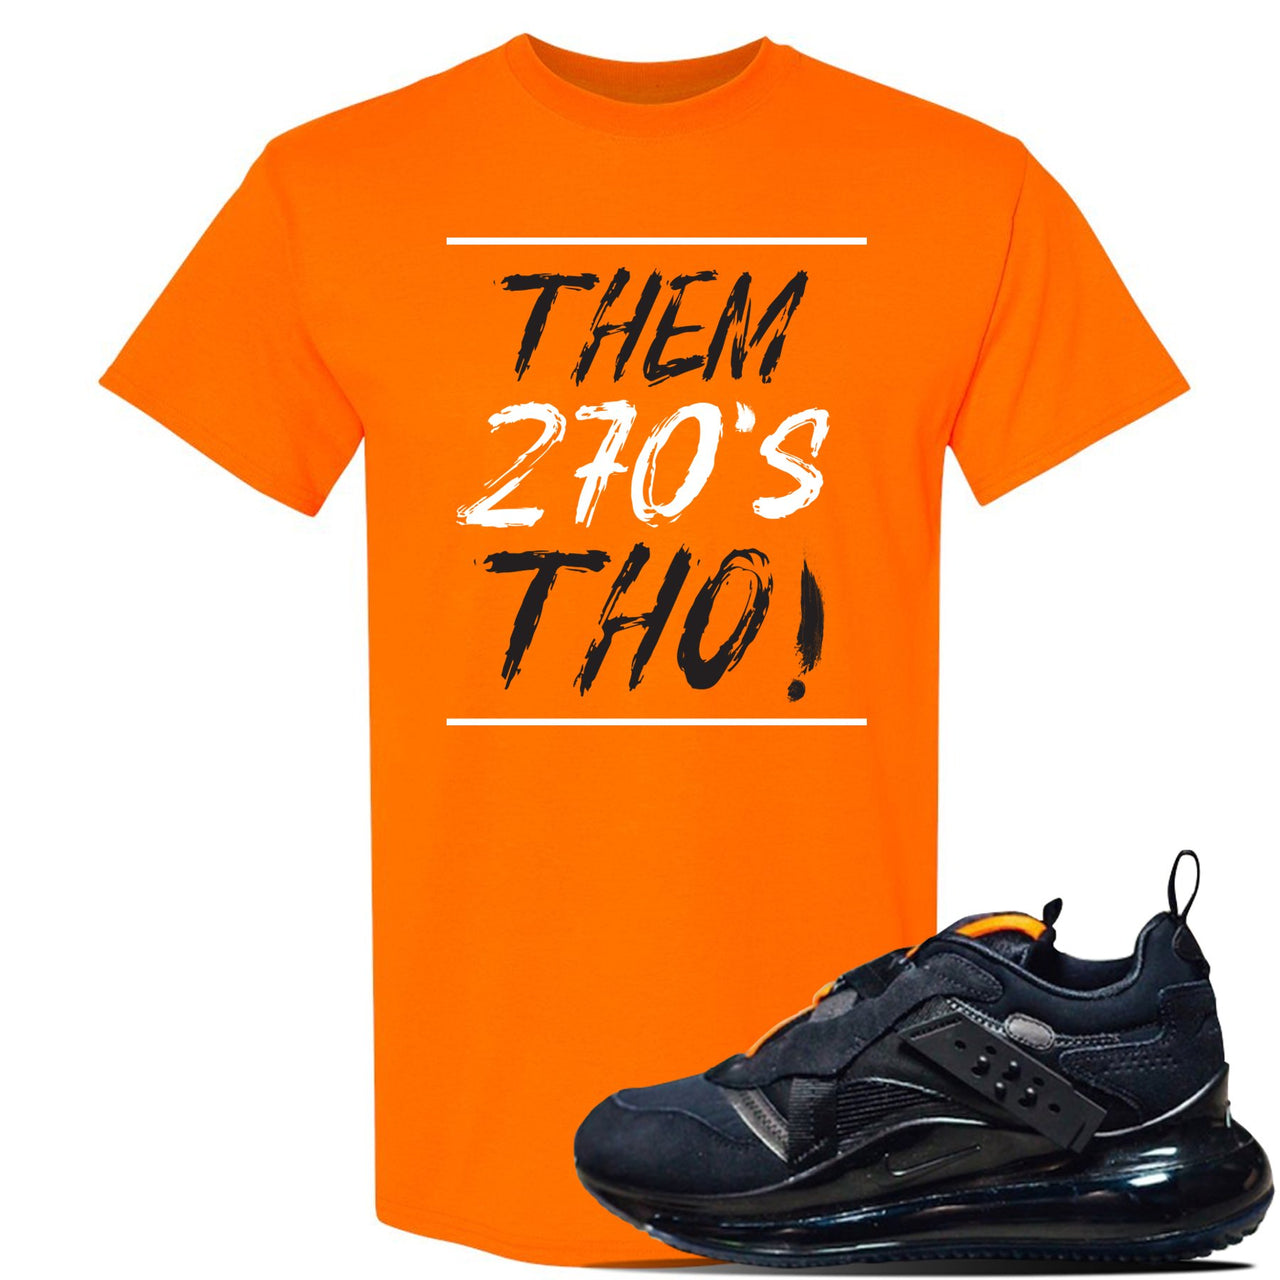 Air Max 720 OBJ Slip Sneaker Safety Orange T Shirt | Tees to match Nike Air Max 720 OBJ Slip Shoes | Them 720's Tho